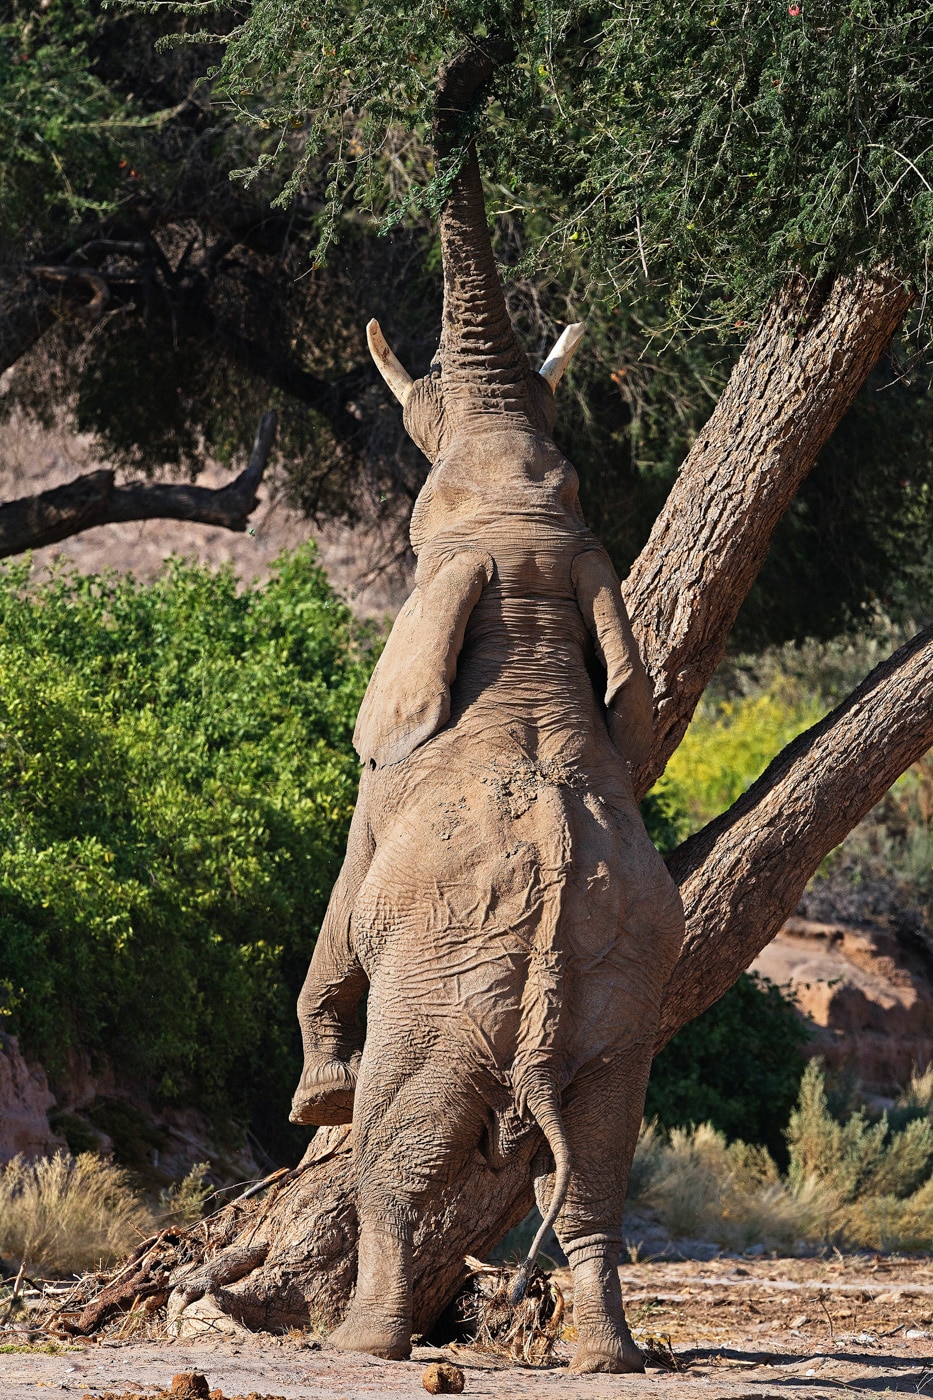 Elephant eating from a tree, Namibia, Namibia Safari